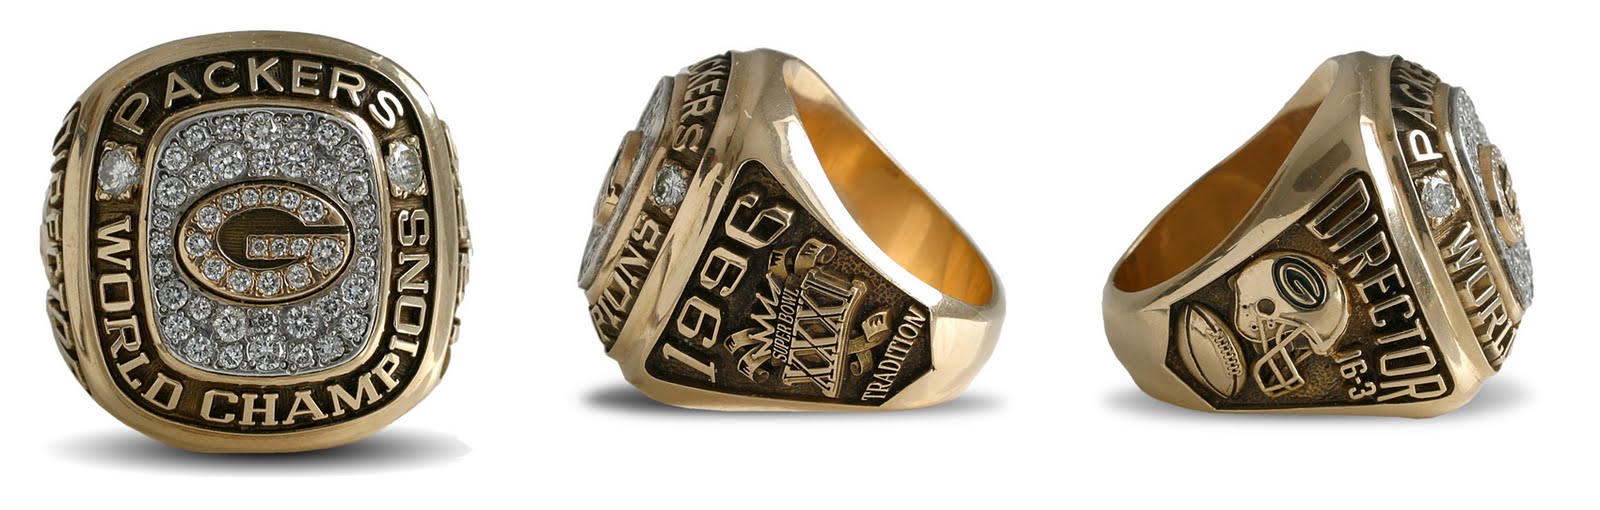 eli manning championship rings